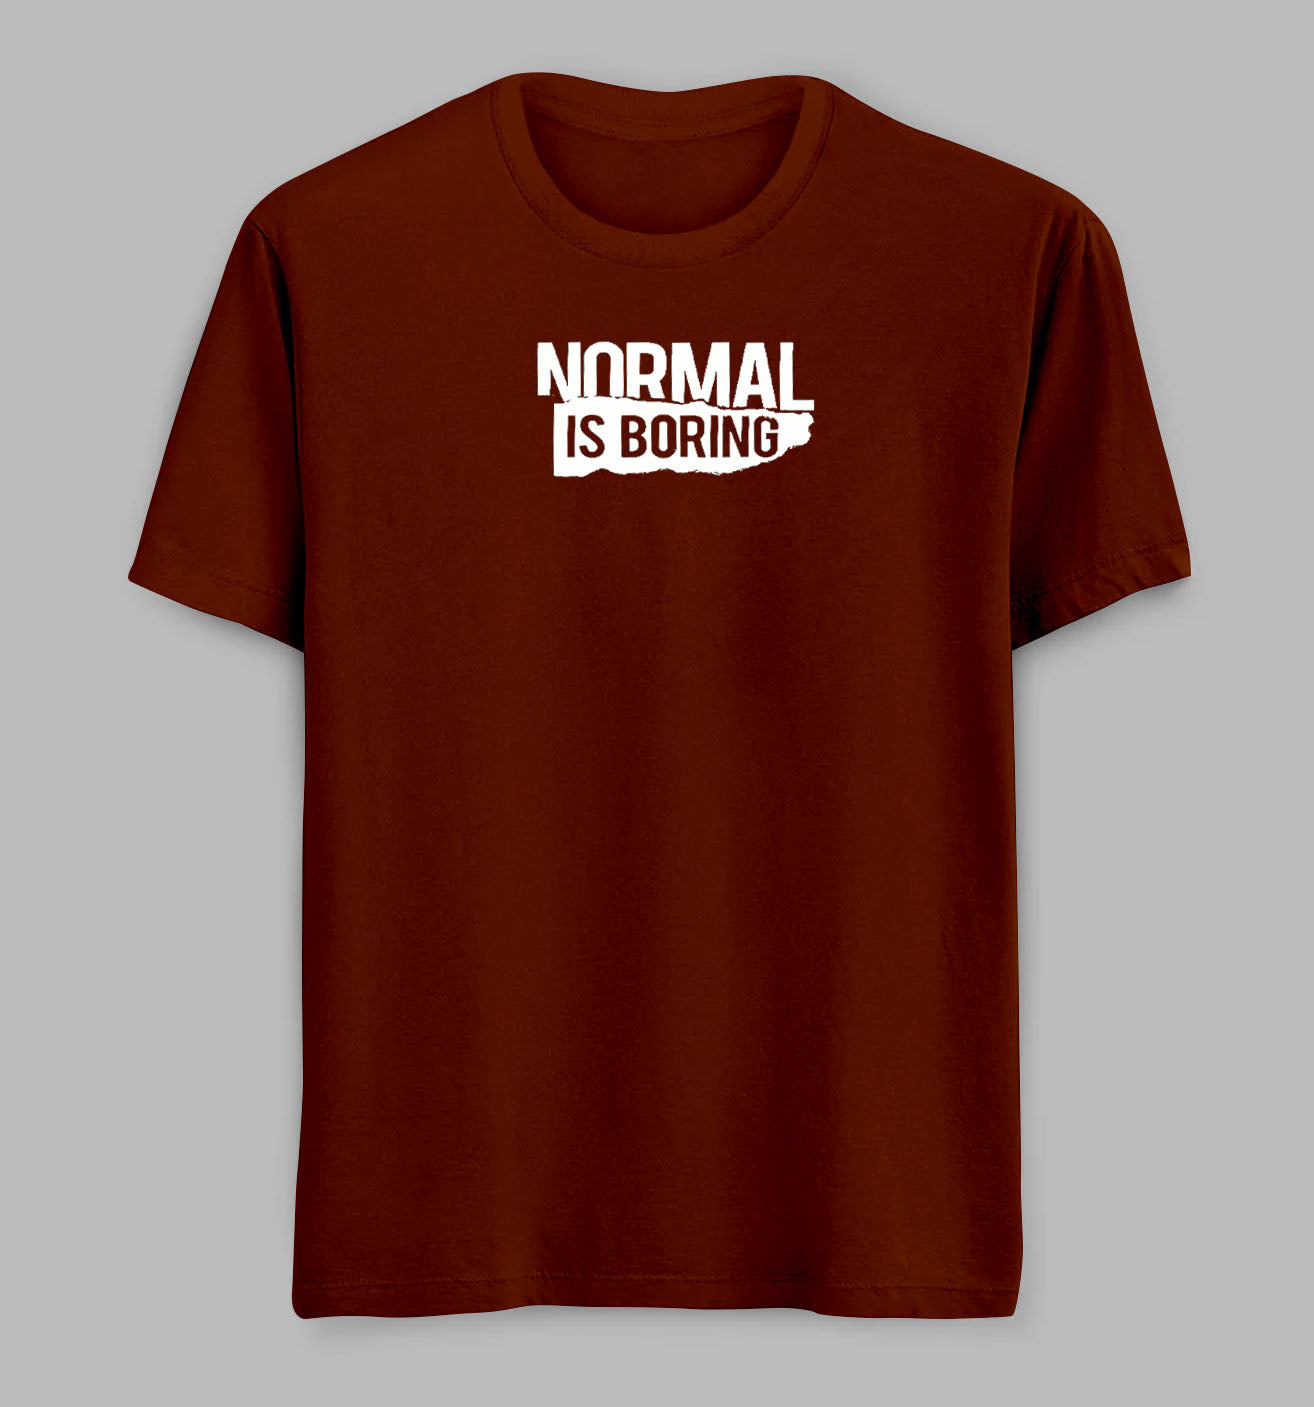 Normal Is Boring Tees/ Tshirts